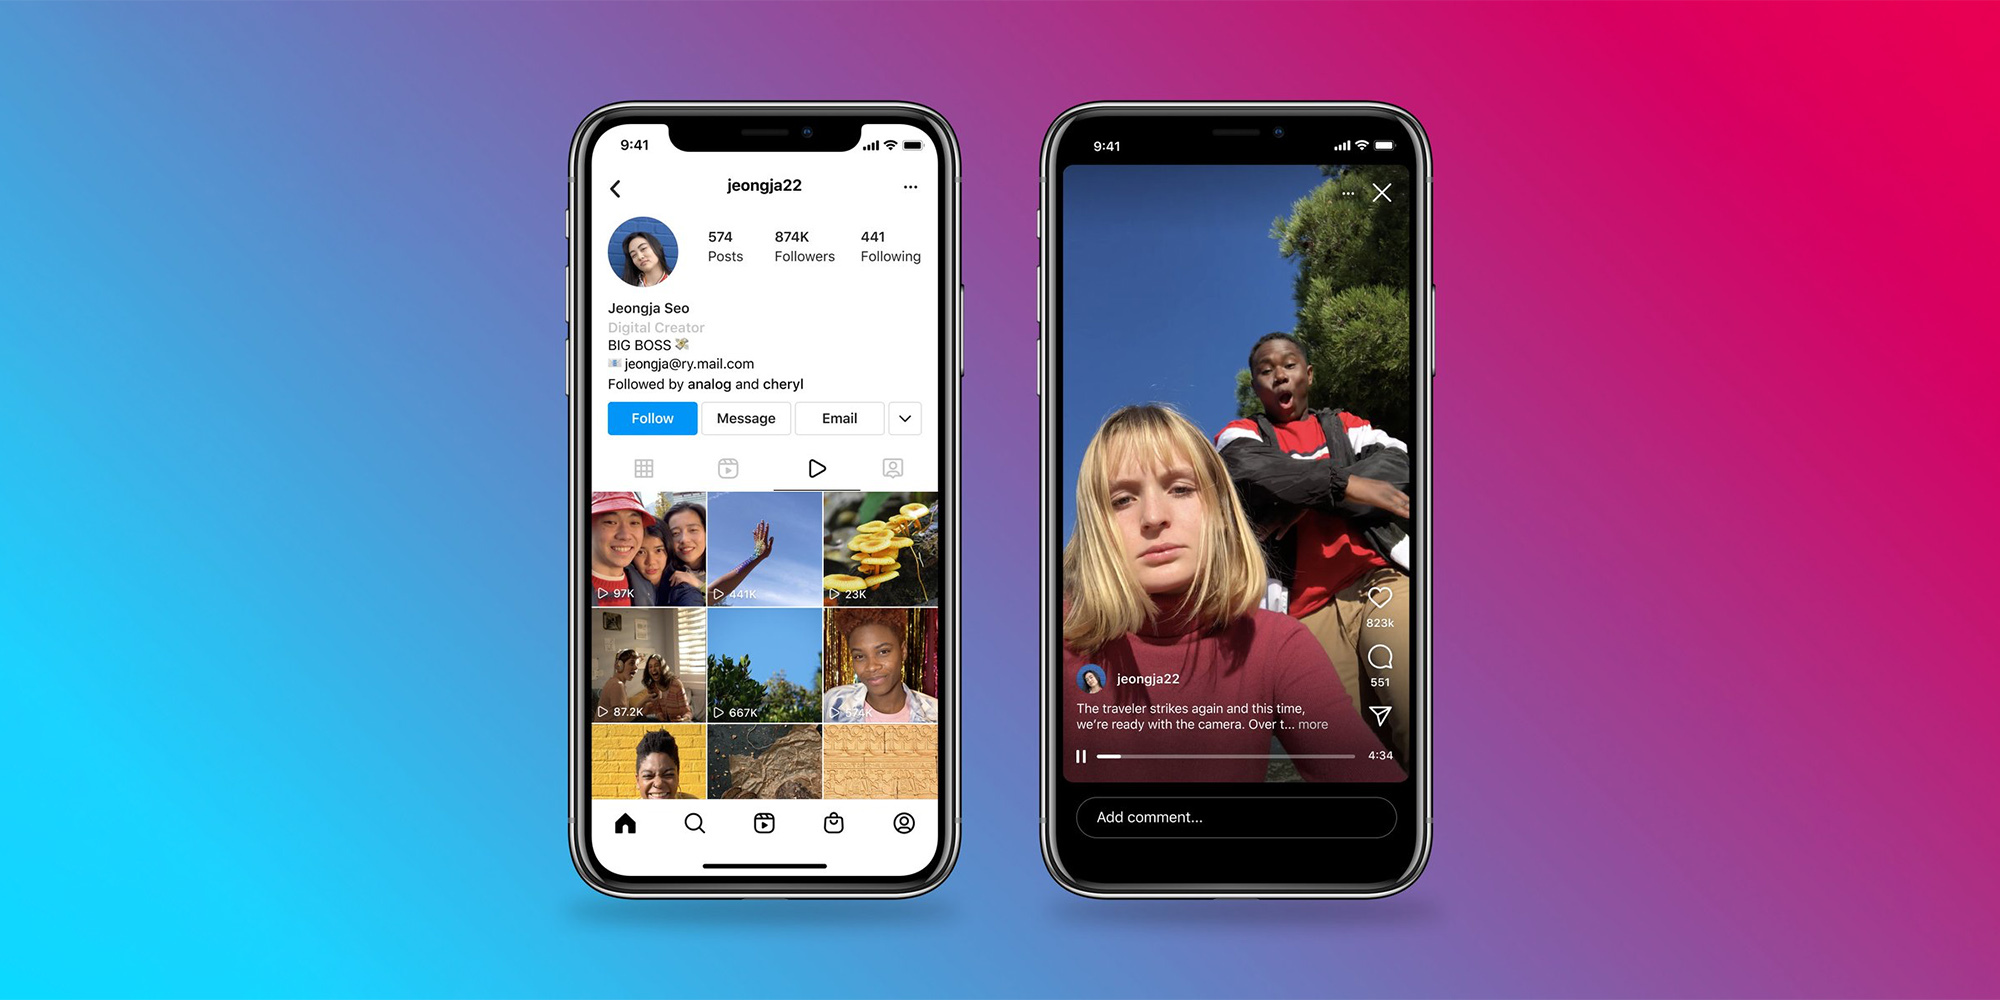 trim video for instagram on mac